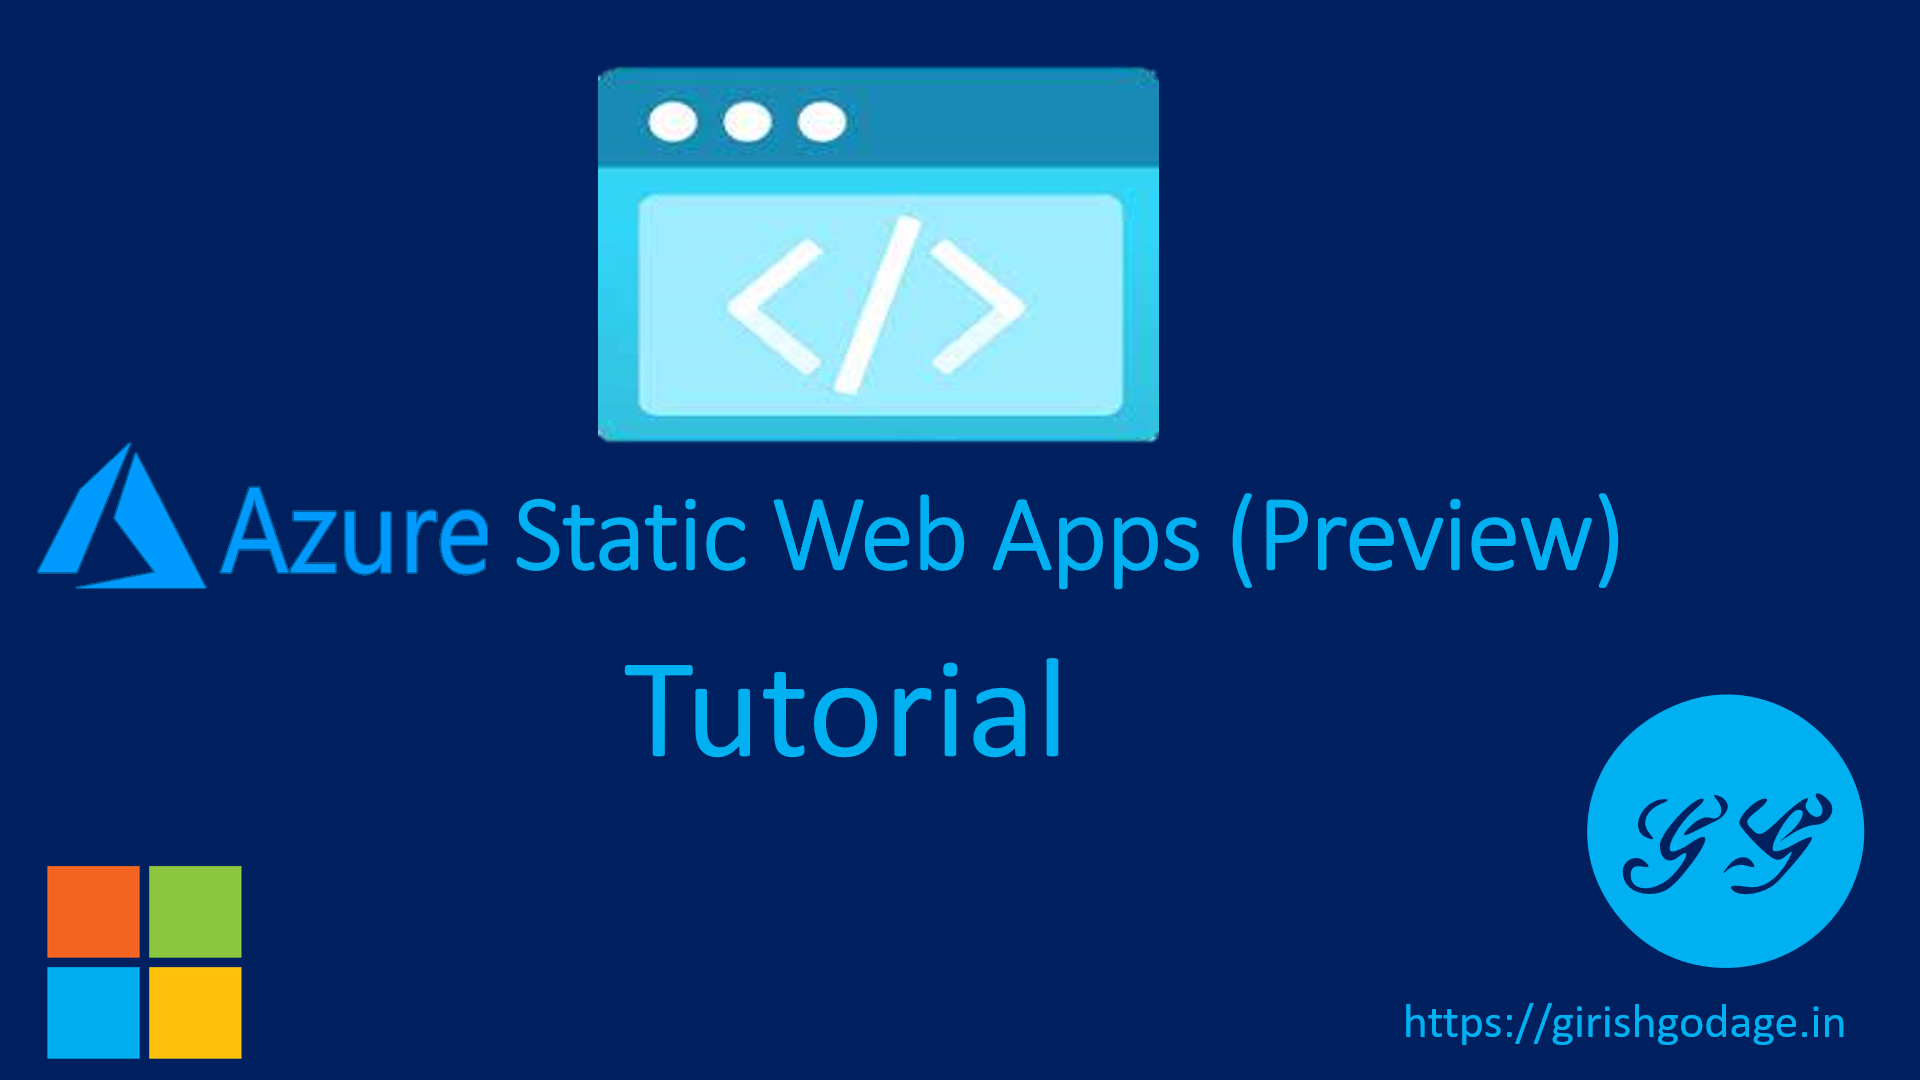 Azure Static Web Apps